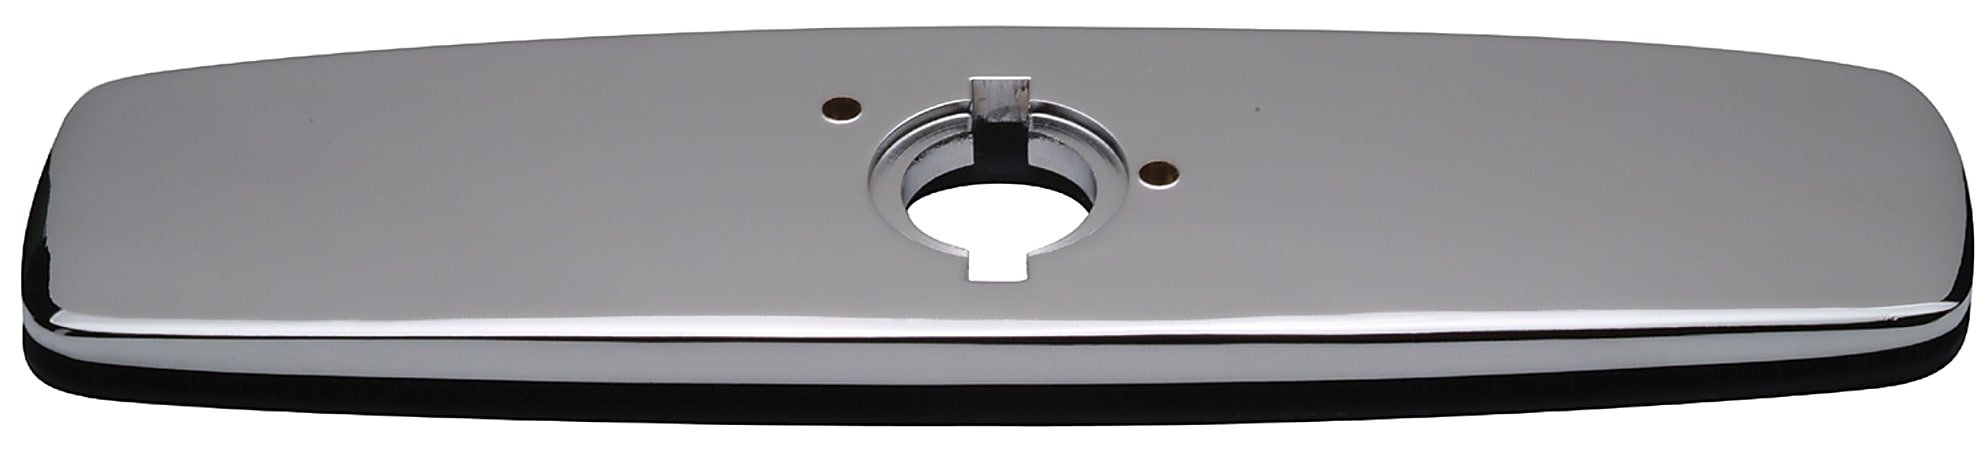 Zurn Centerset Single Post Sensor Faucet Cover Plate, 8”, Chrome, P6900-CP8